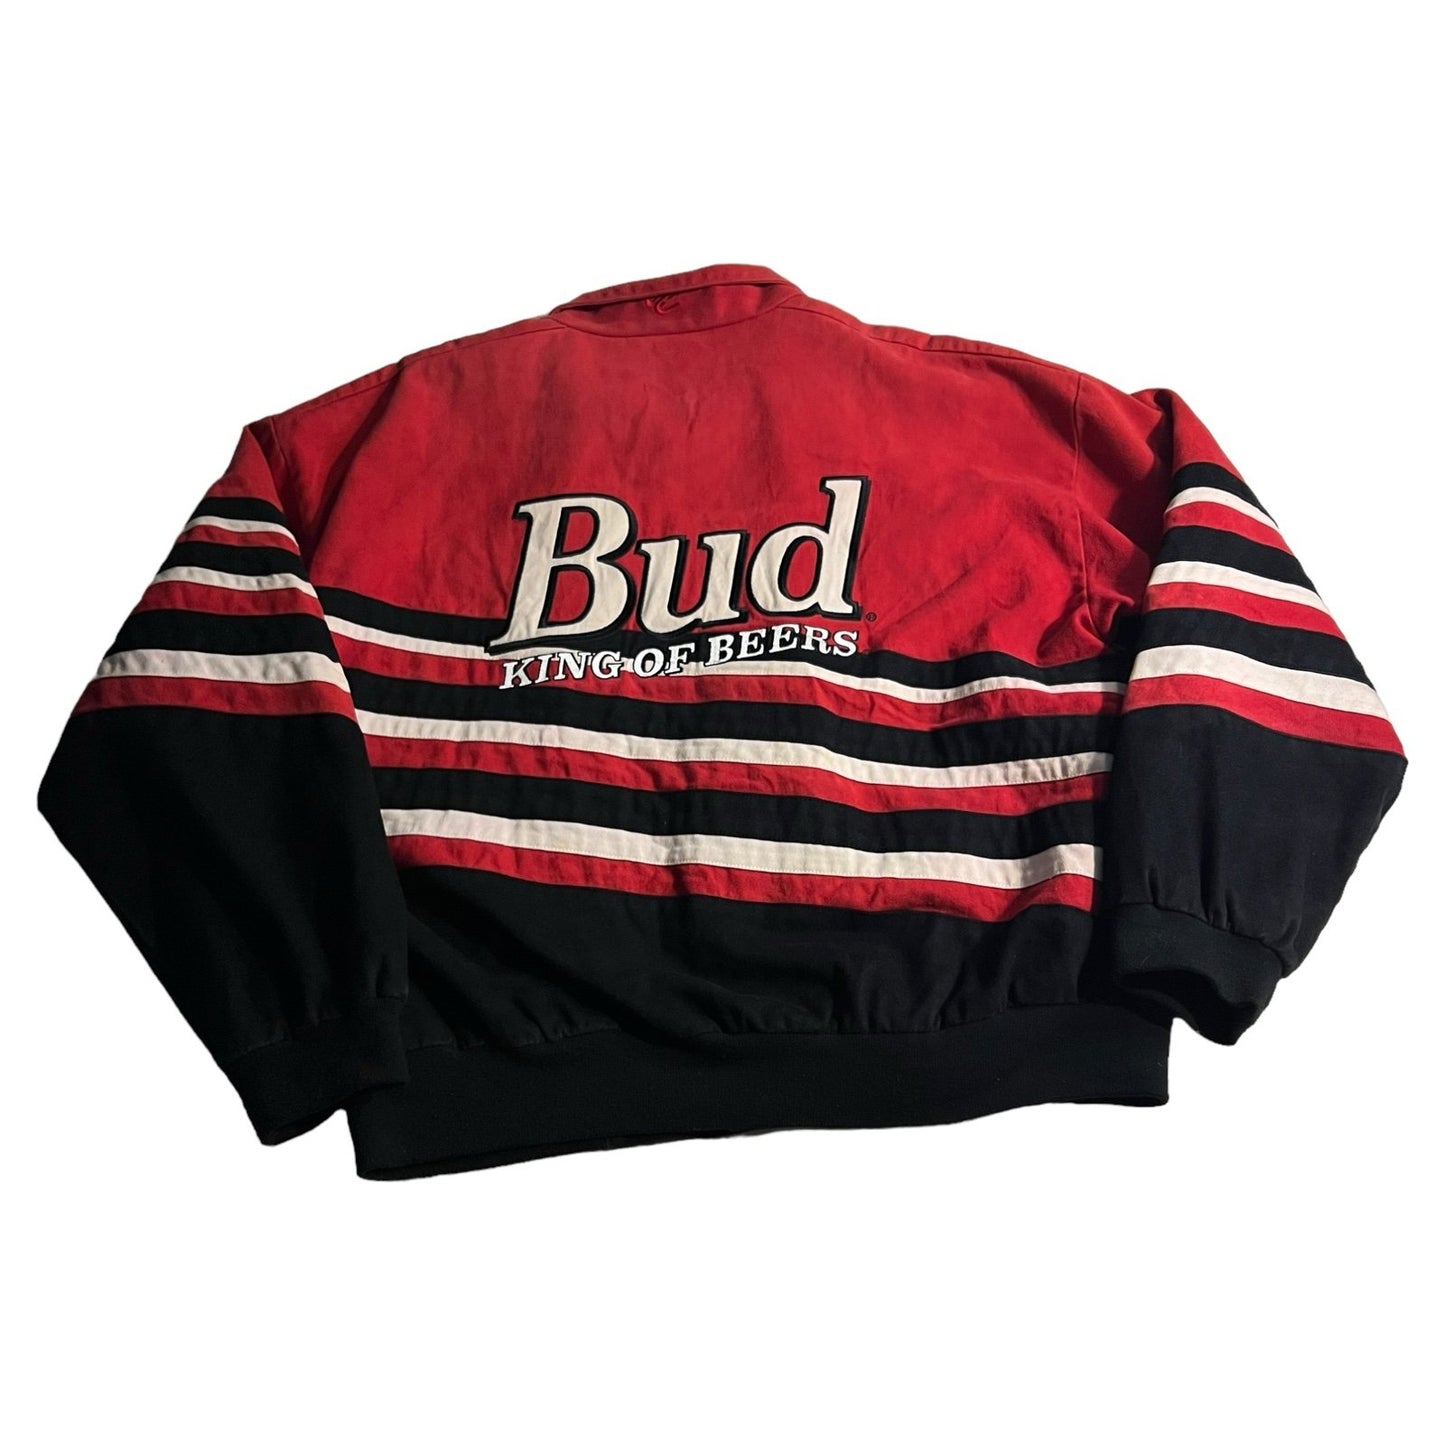 Vintage Budweiser Racing Jacket Mens XL Chase Authentic Dale Earnhardt NASCAR